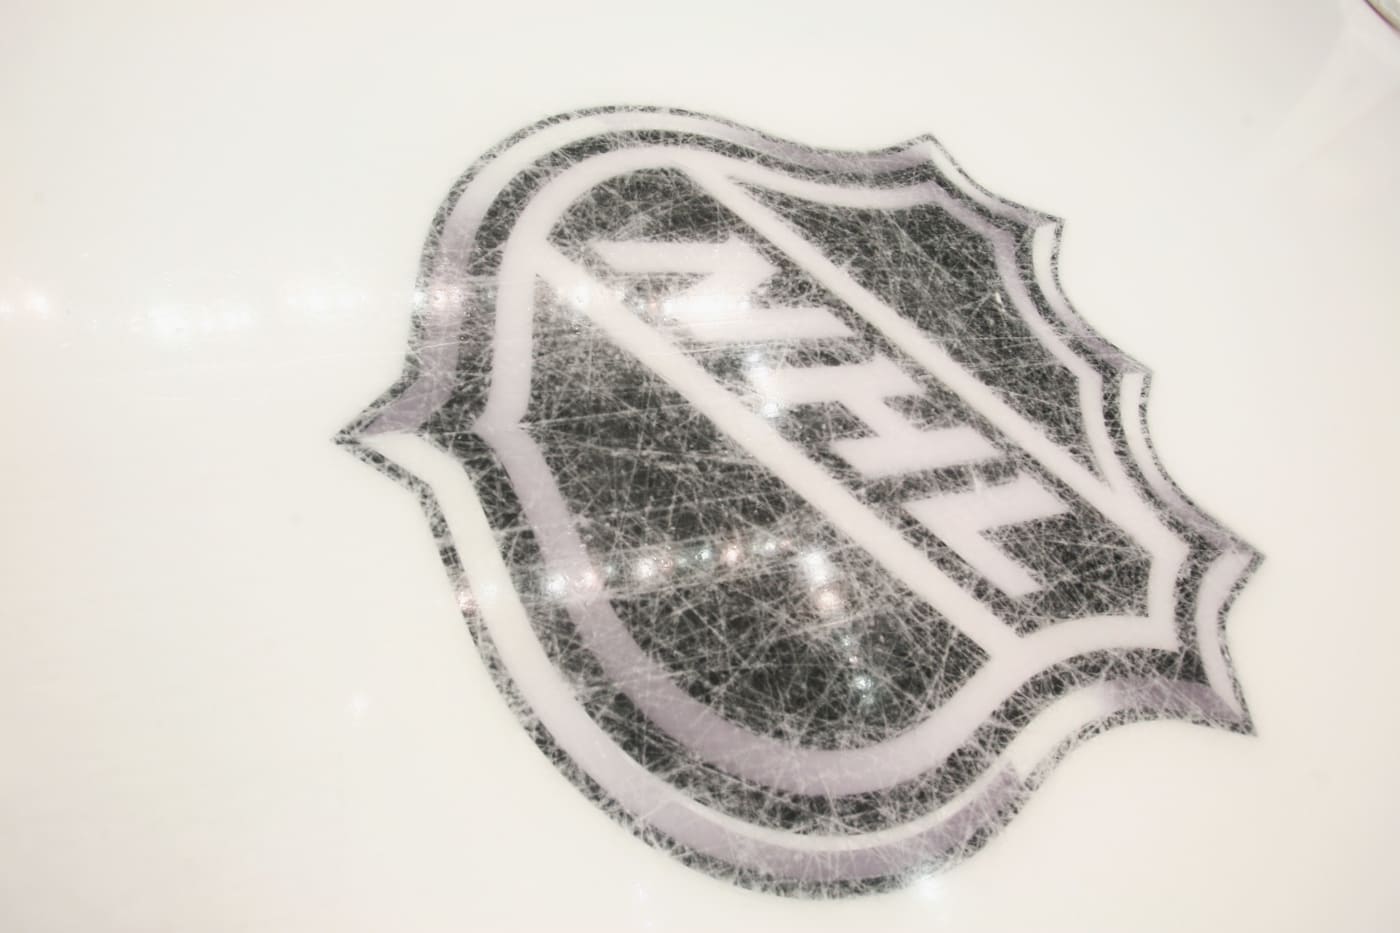 national hockey league logo on the ice